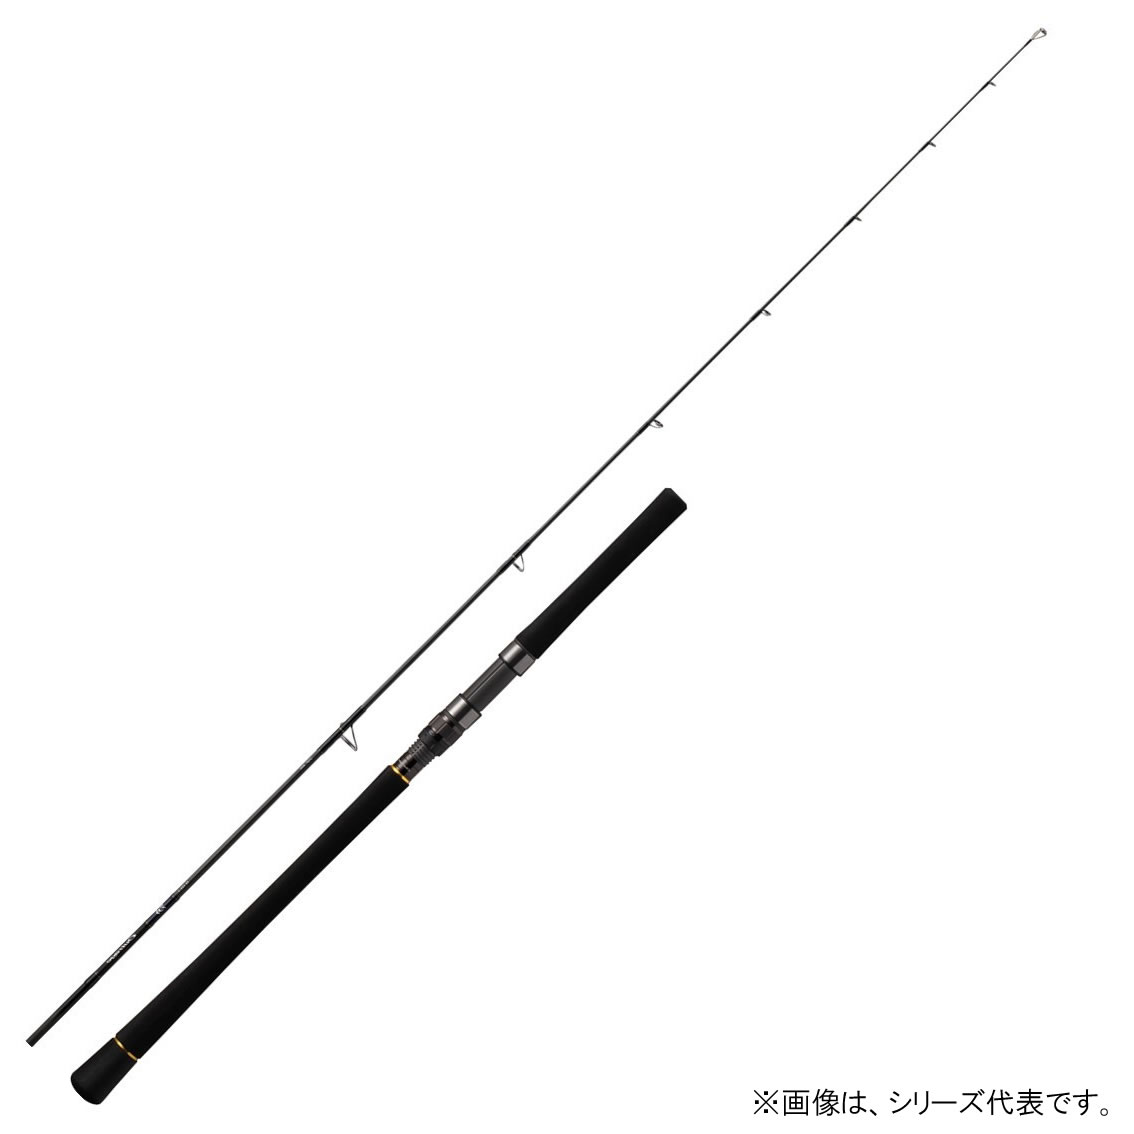  Daiwa наружный Ray jiBR C83-6 (Daiwa литье удилище стержень рыбалка 2 деталь )( большой товар A)